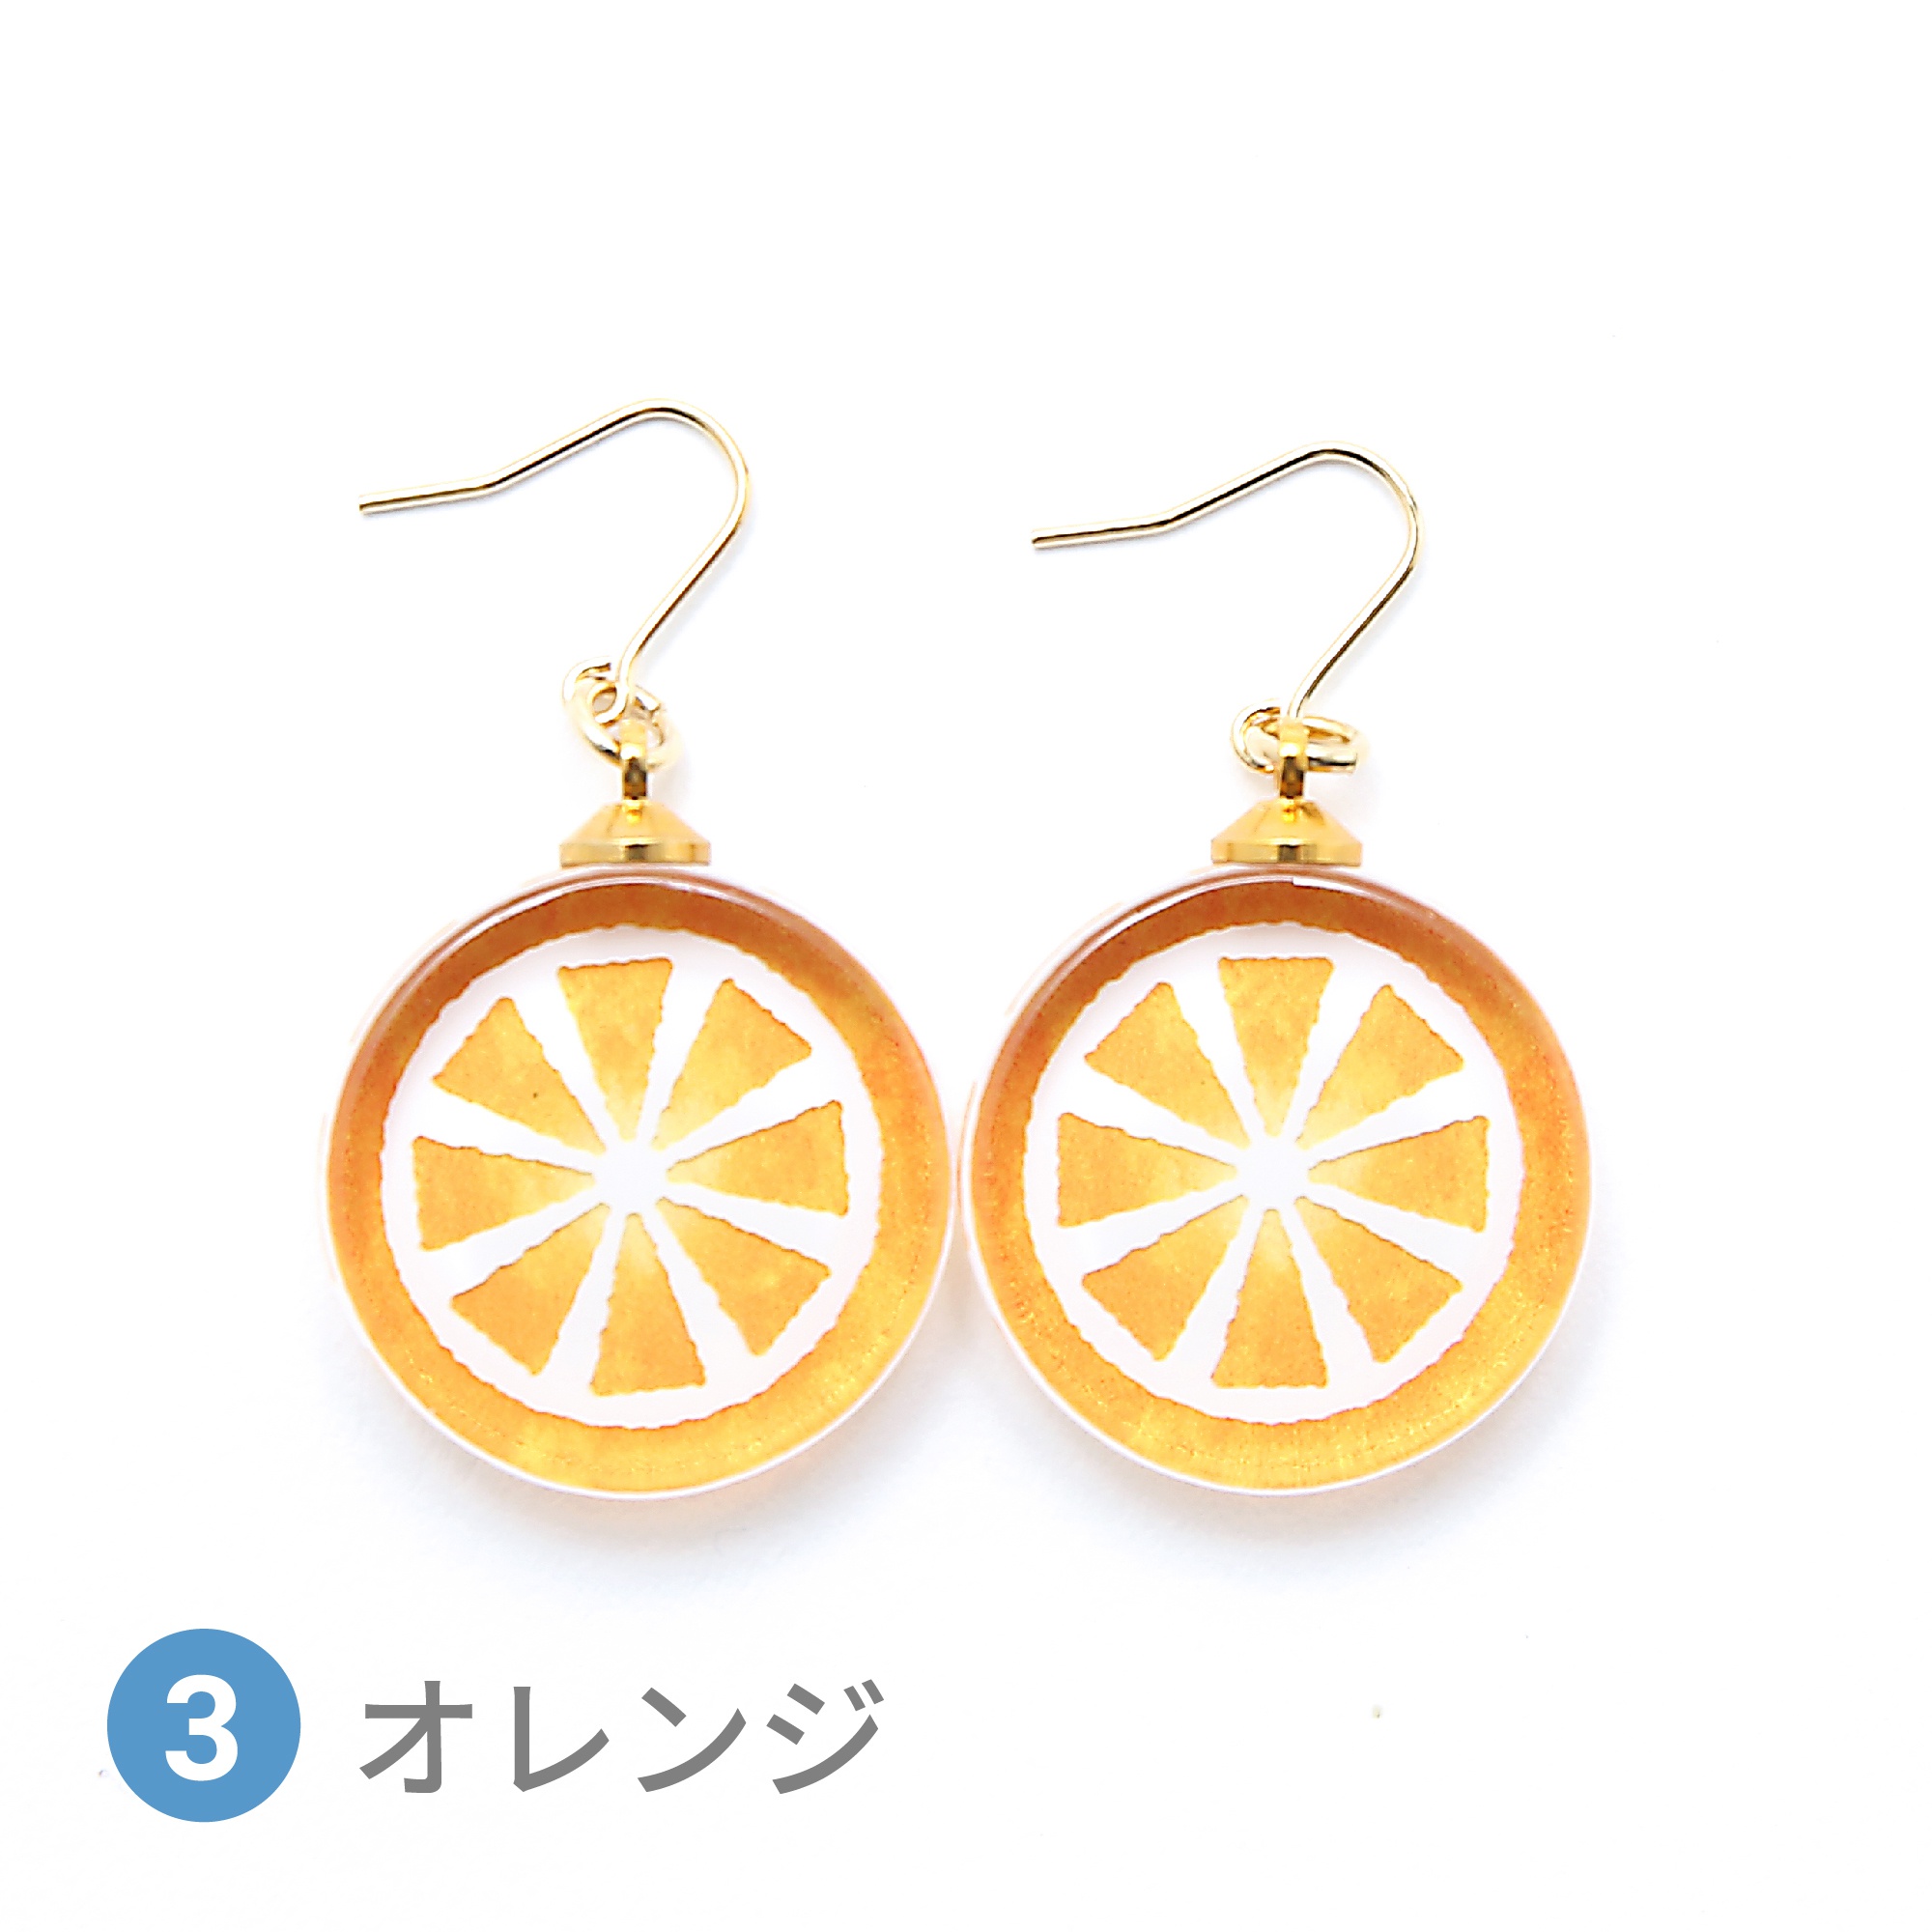 Glass accessories Pierced Earring candy orange round shape